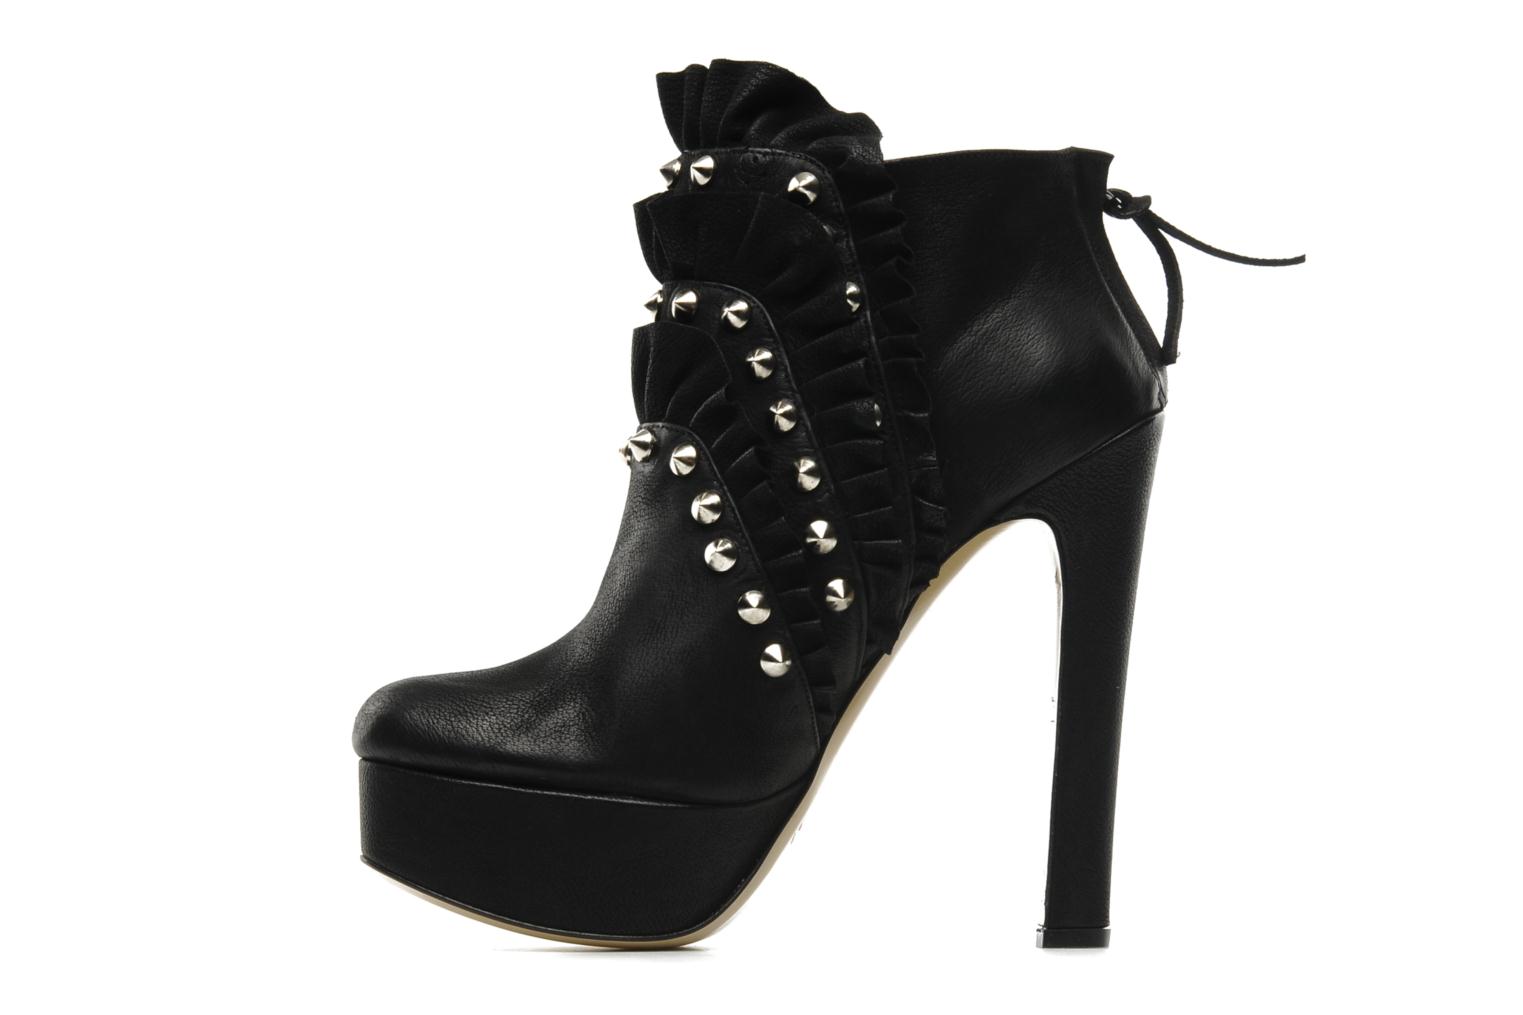 De Siena shoes Elvira Ankle boots in Black at Sarenza.co.uk (107326)